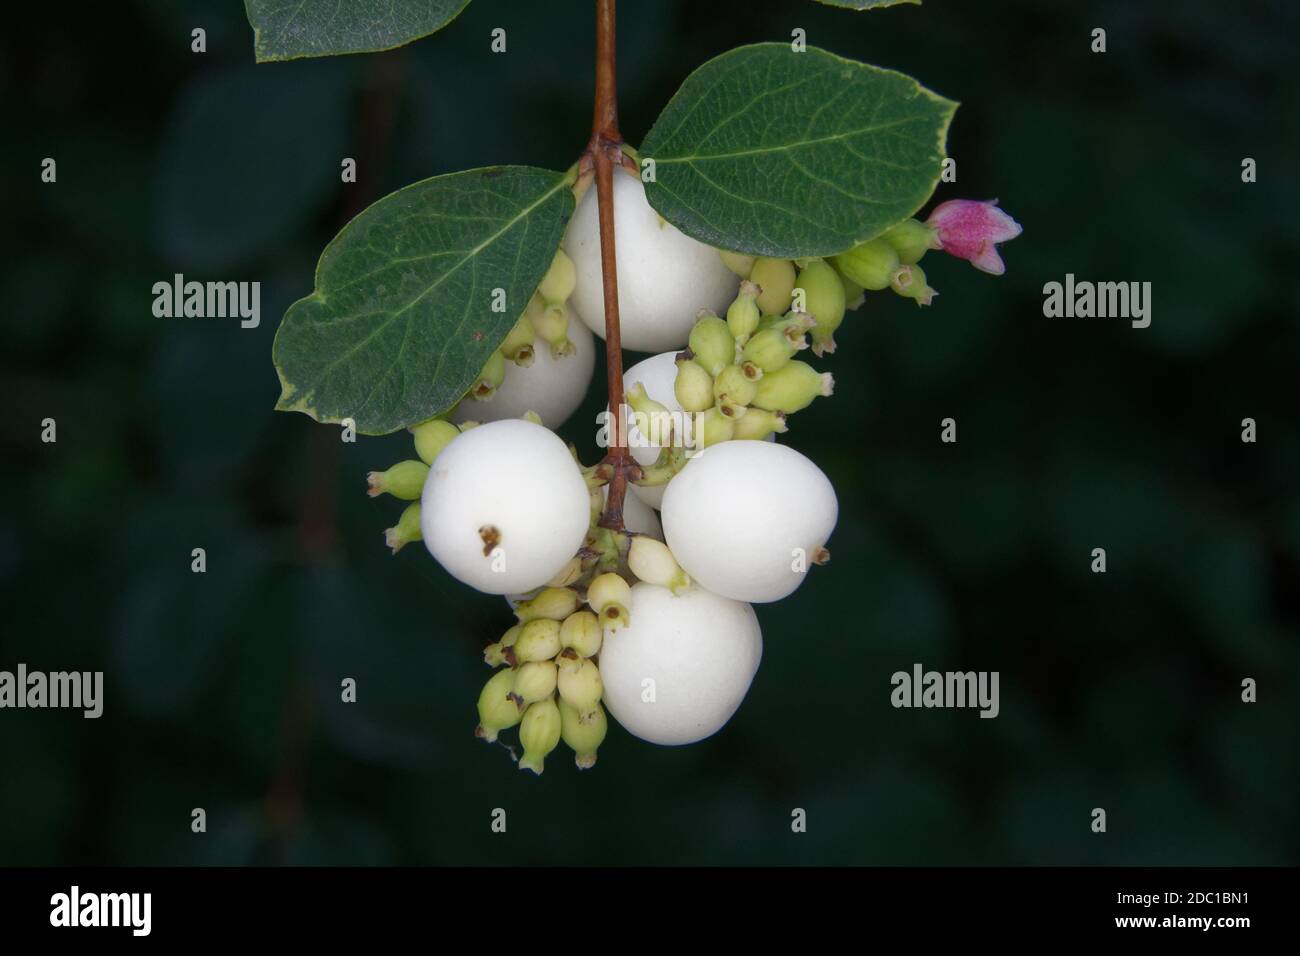 Symphoricarpos albus, Differently ripened fruits of a snowberry bush Stock Photo